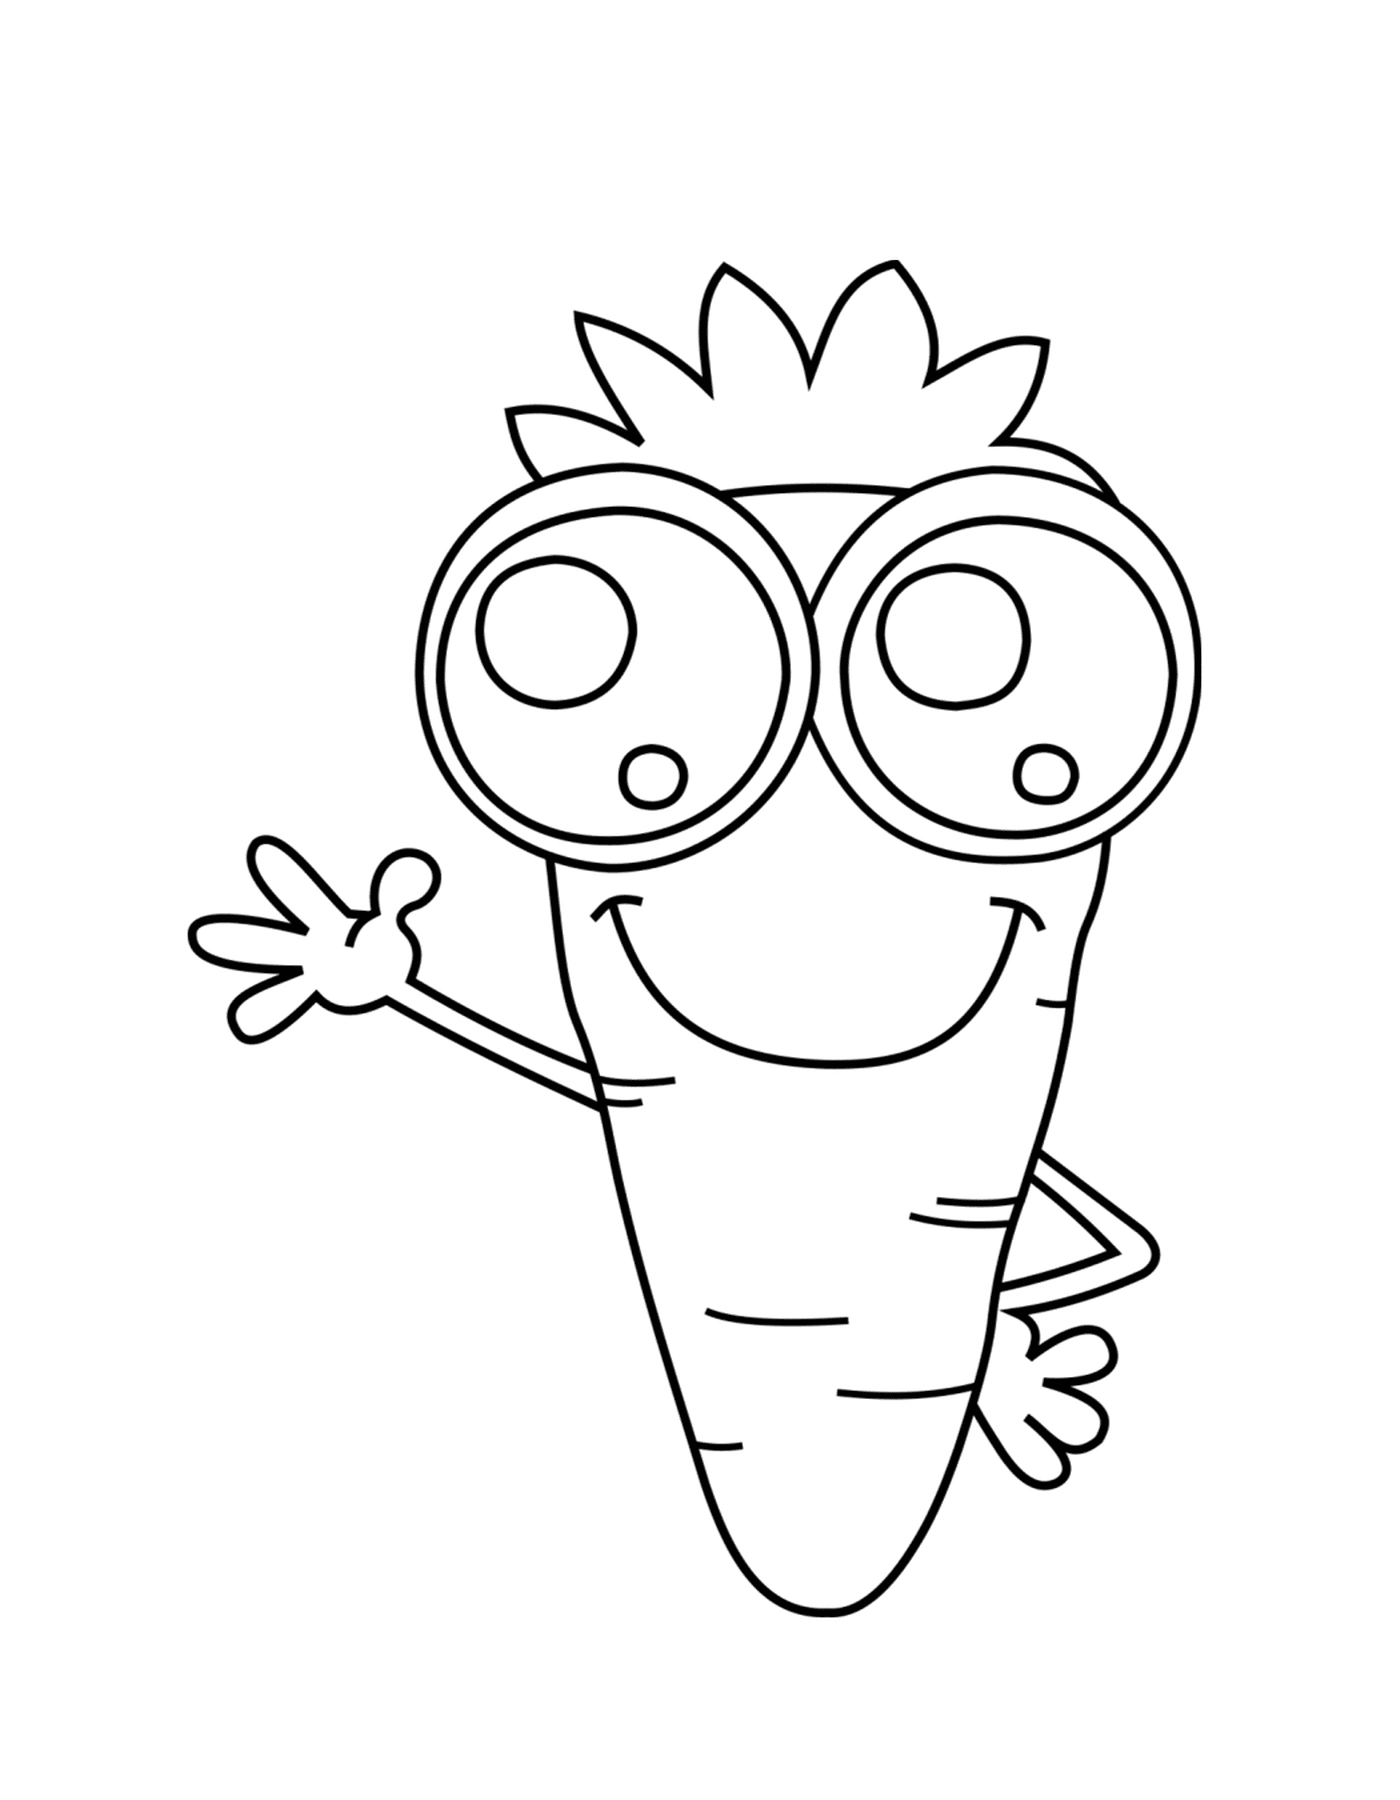  A kawaii carrot with glasses 